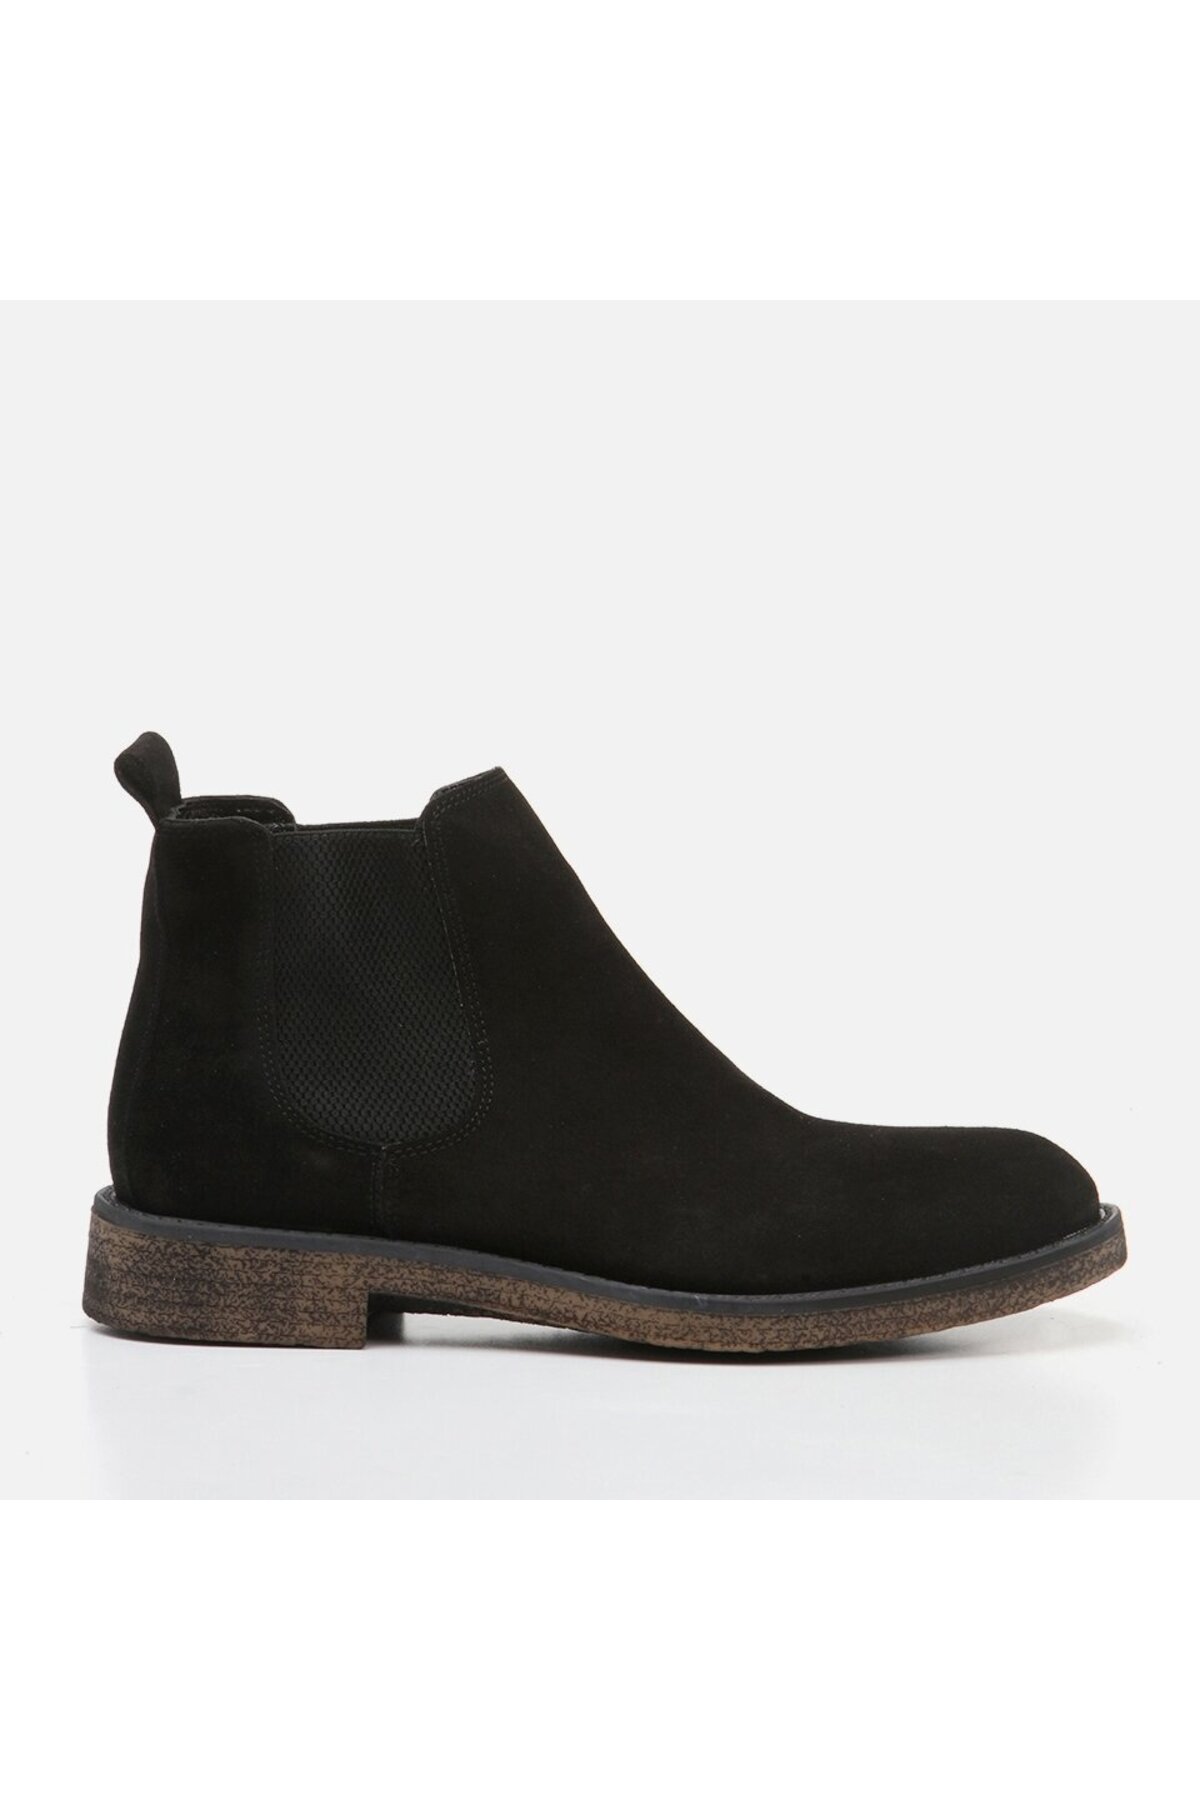 Levně Hotiç Genuine Leather Black Men's Casual Boots